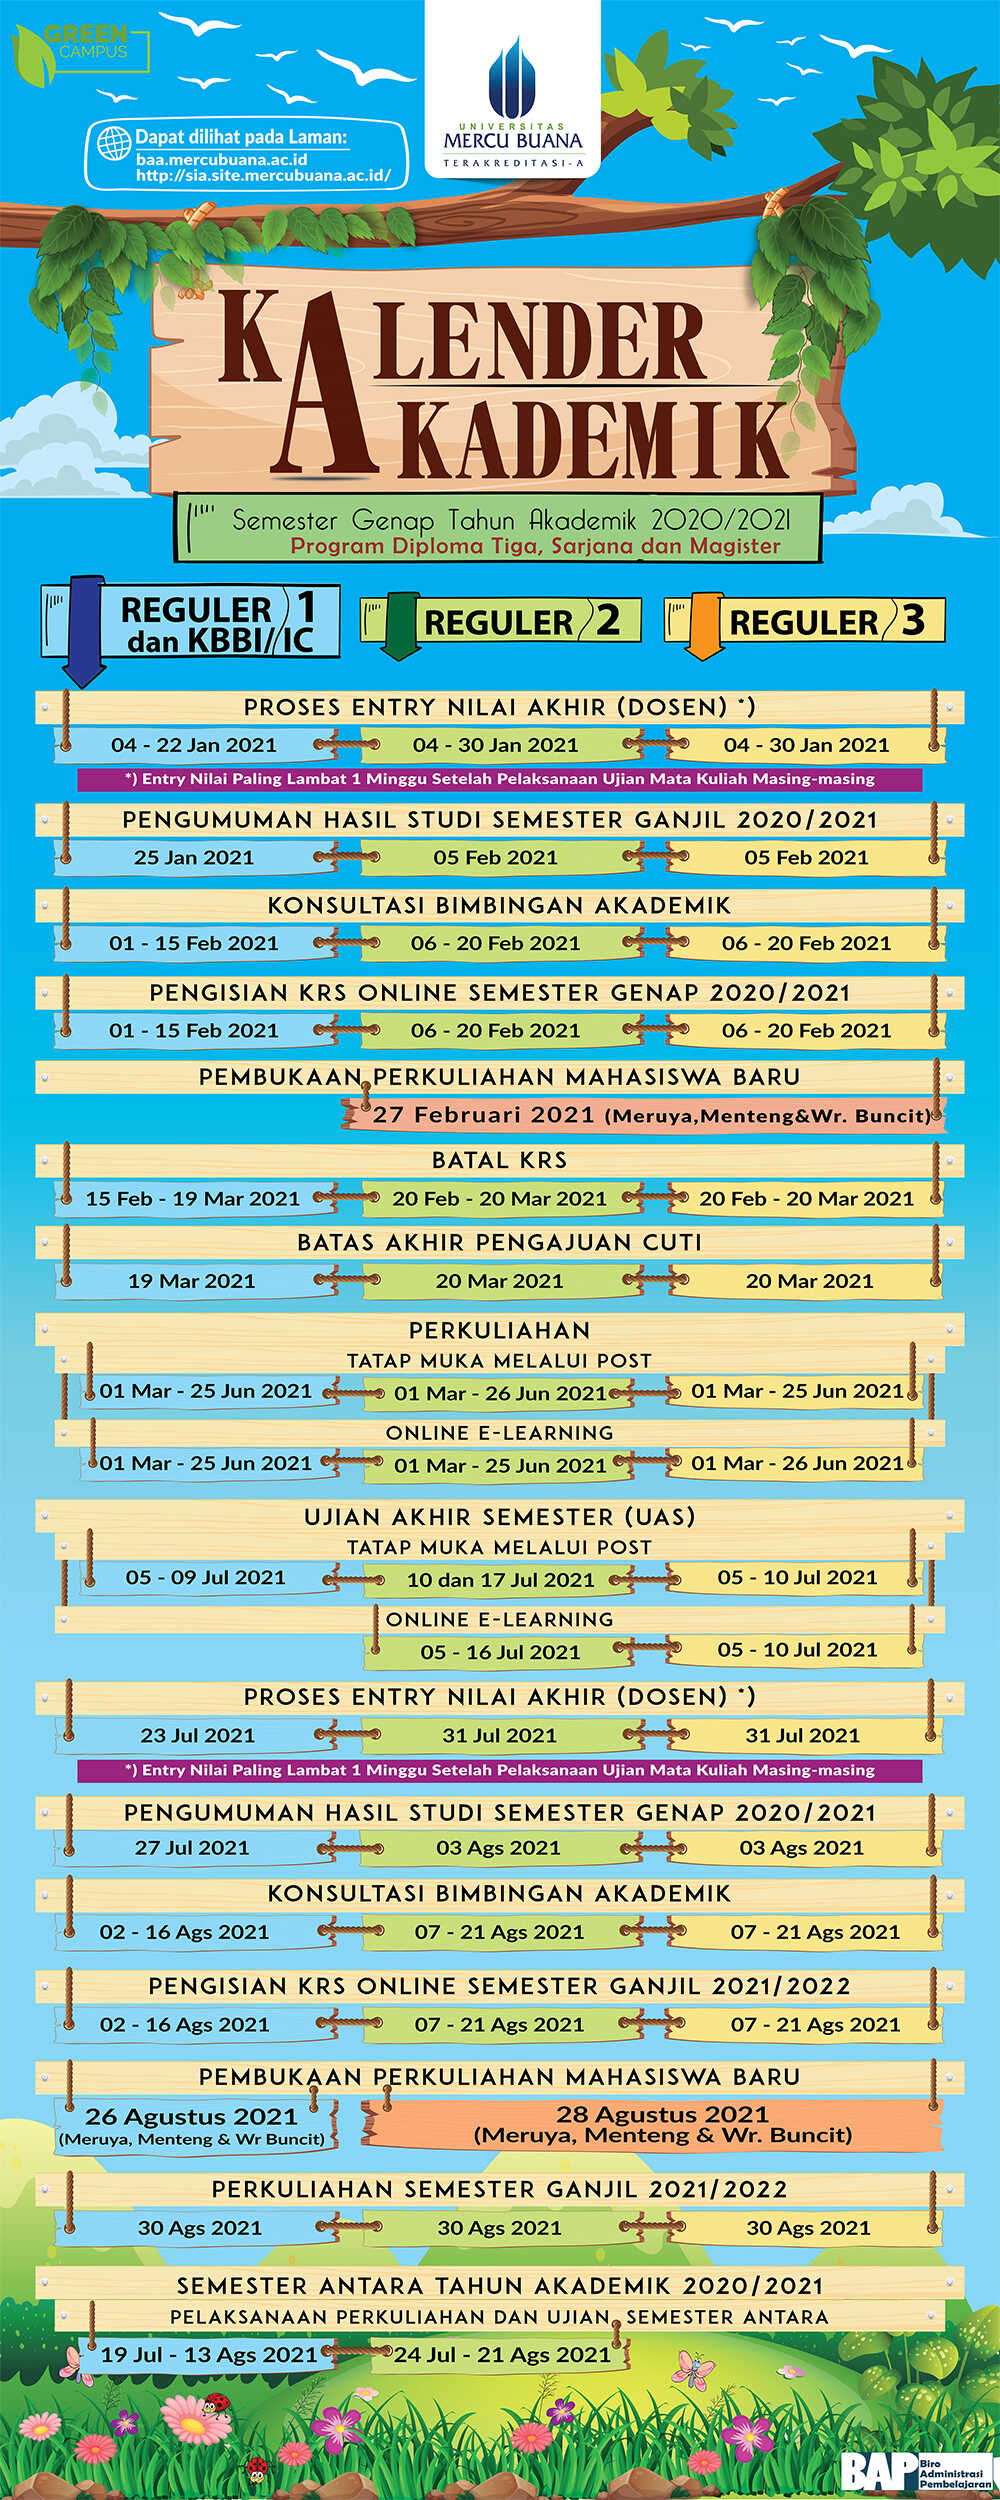 Kalender akademik  Universitas Mercu Buana Jakarta